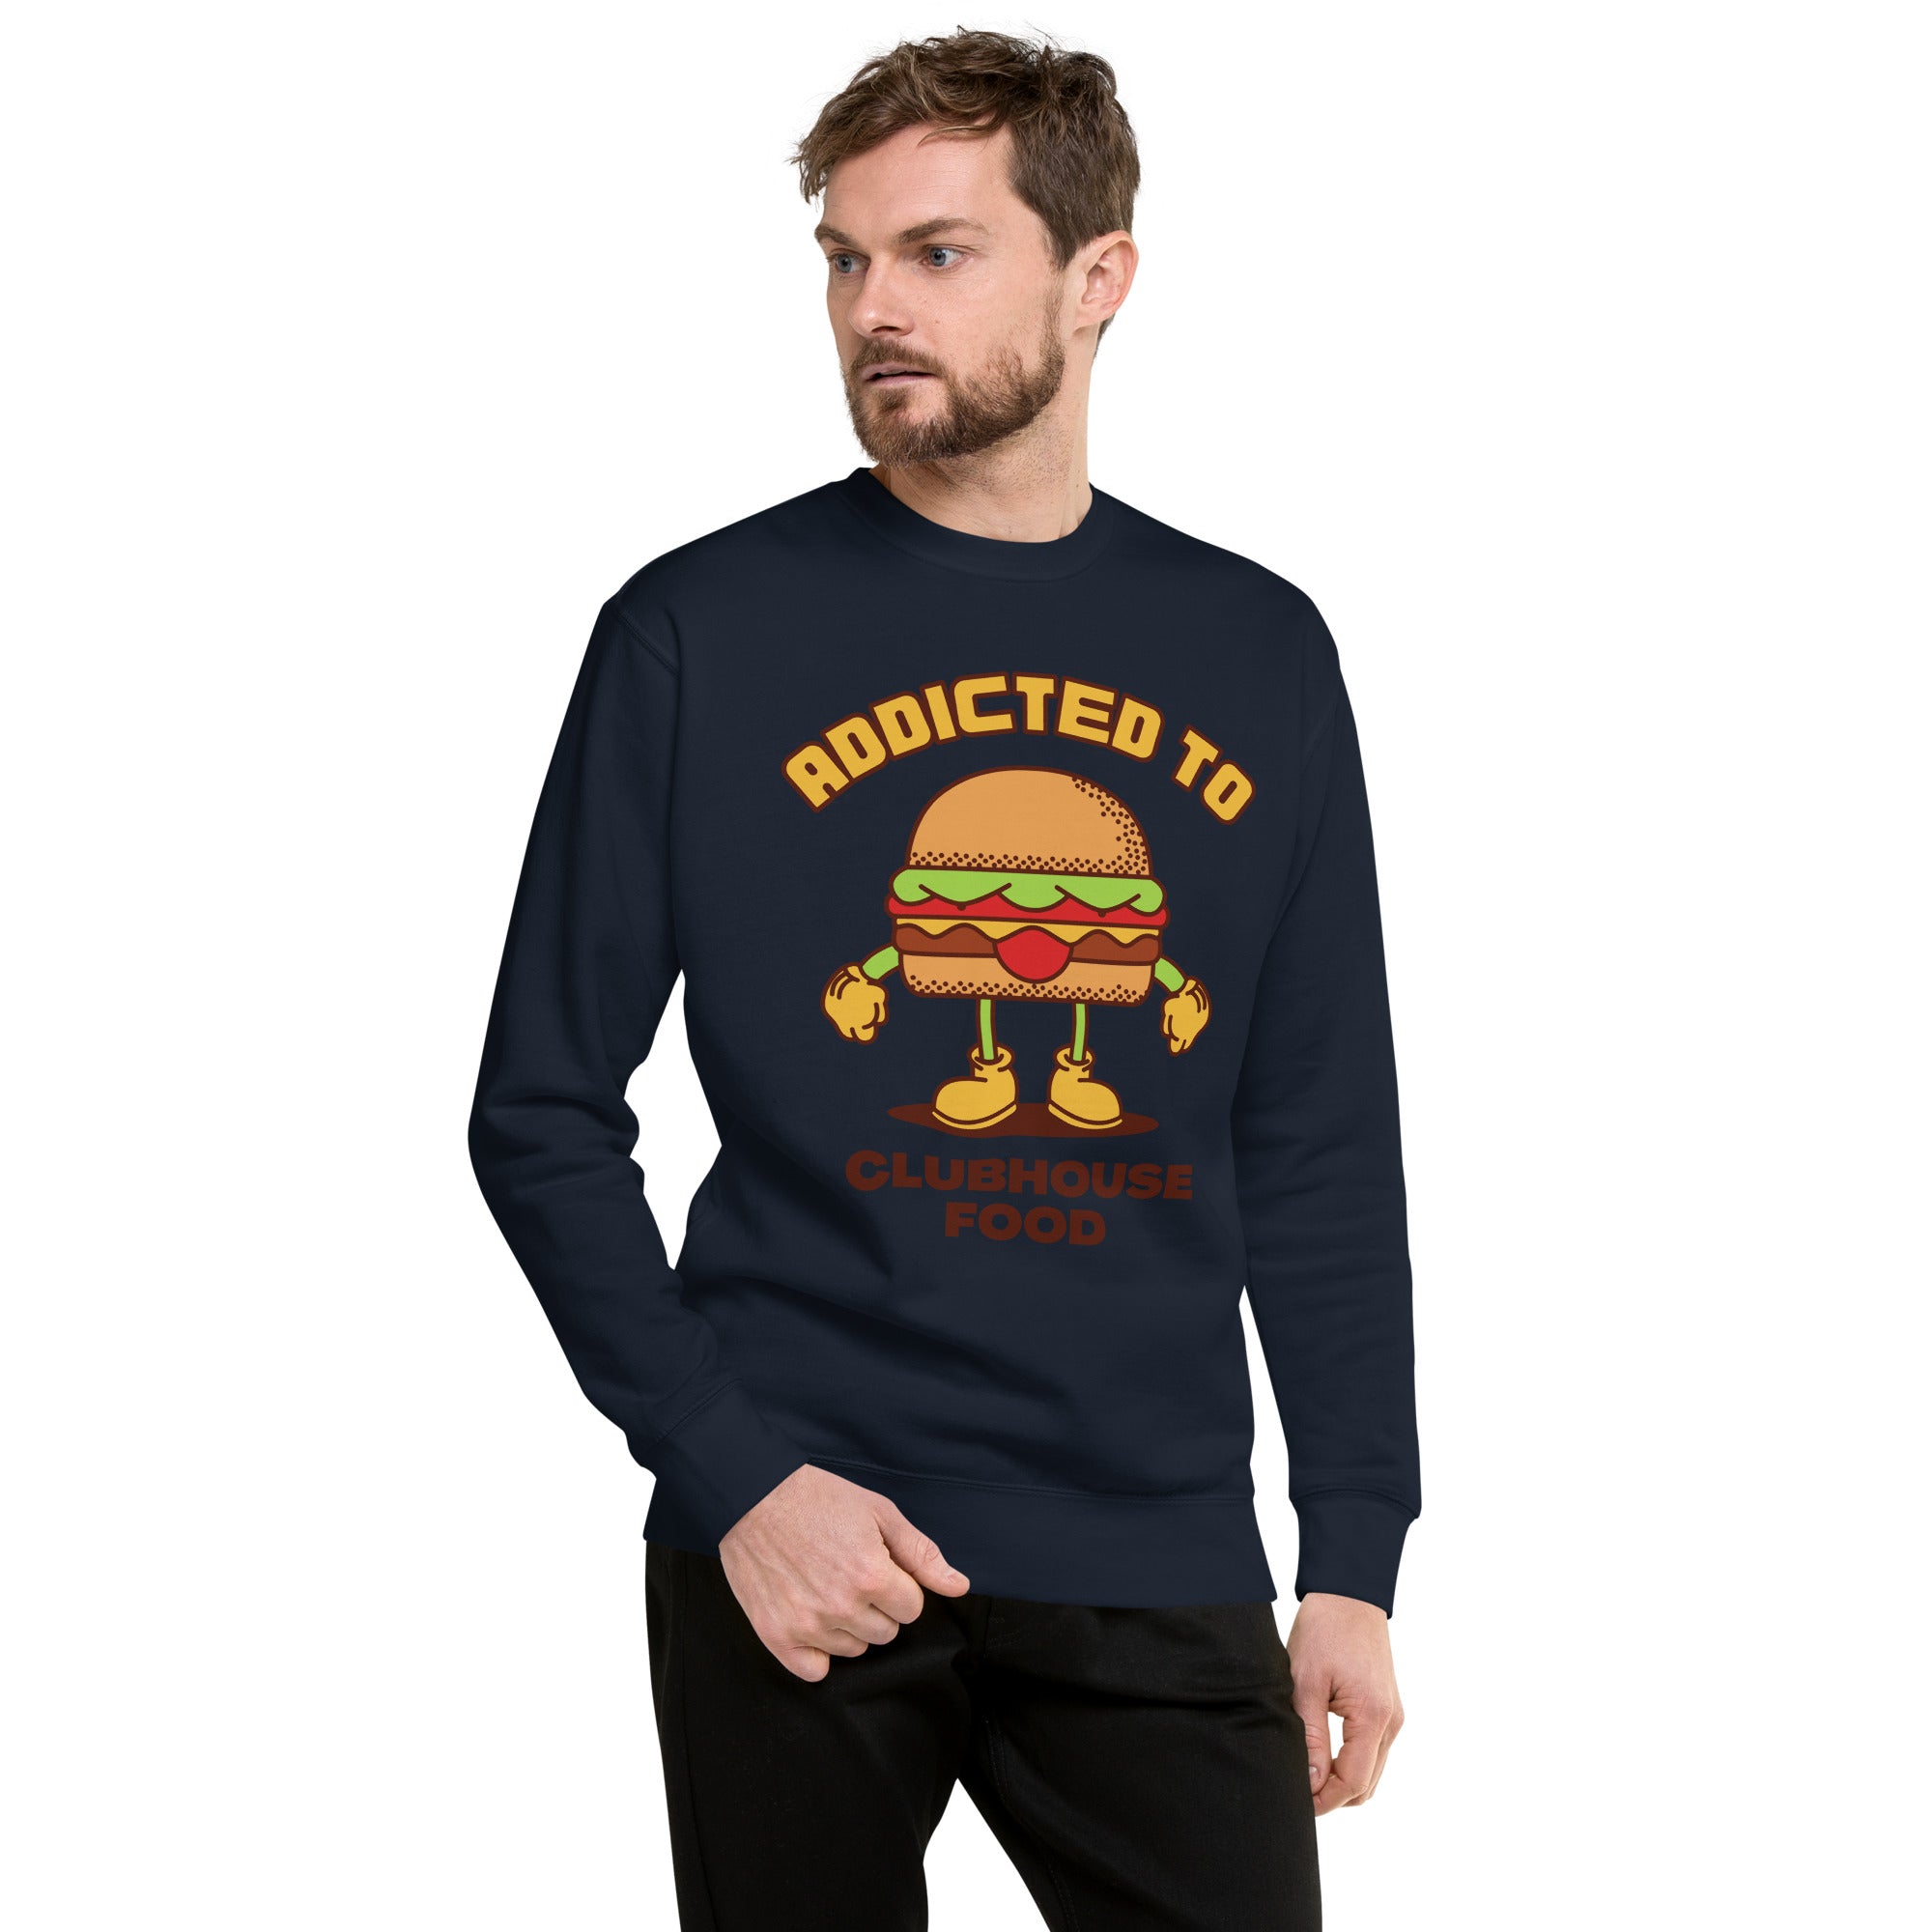 Addicted To Clubhouse Food Heavy Crew Men's Sweatshirt